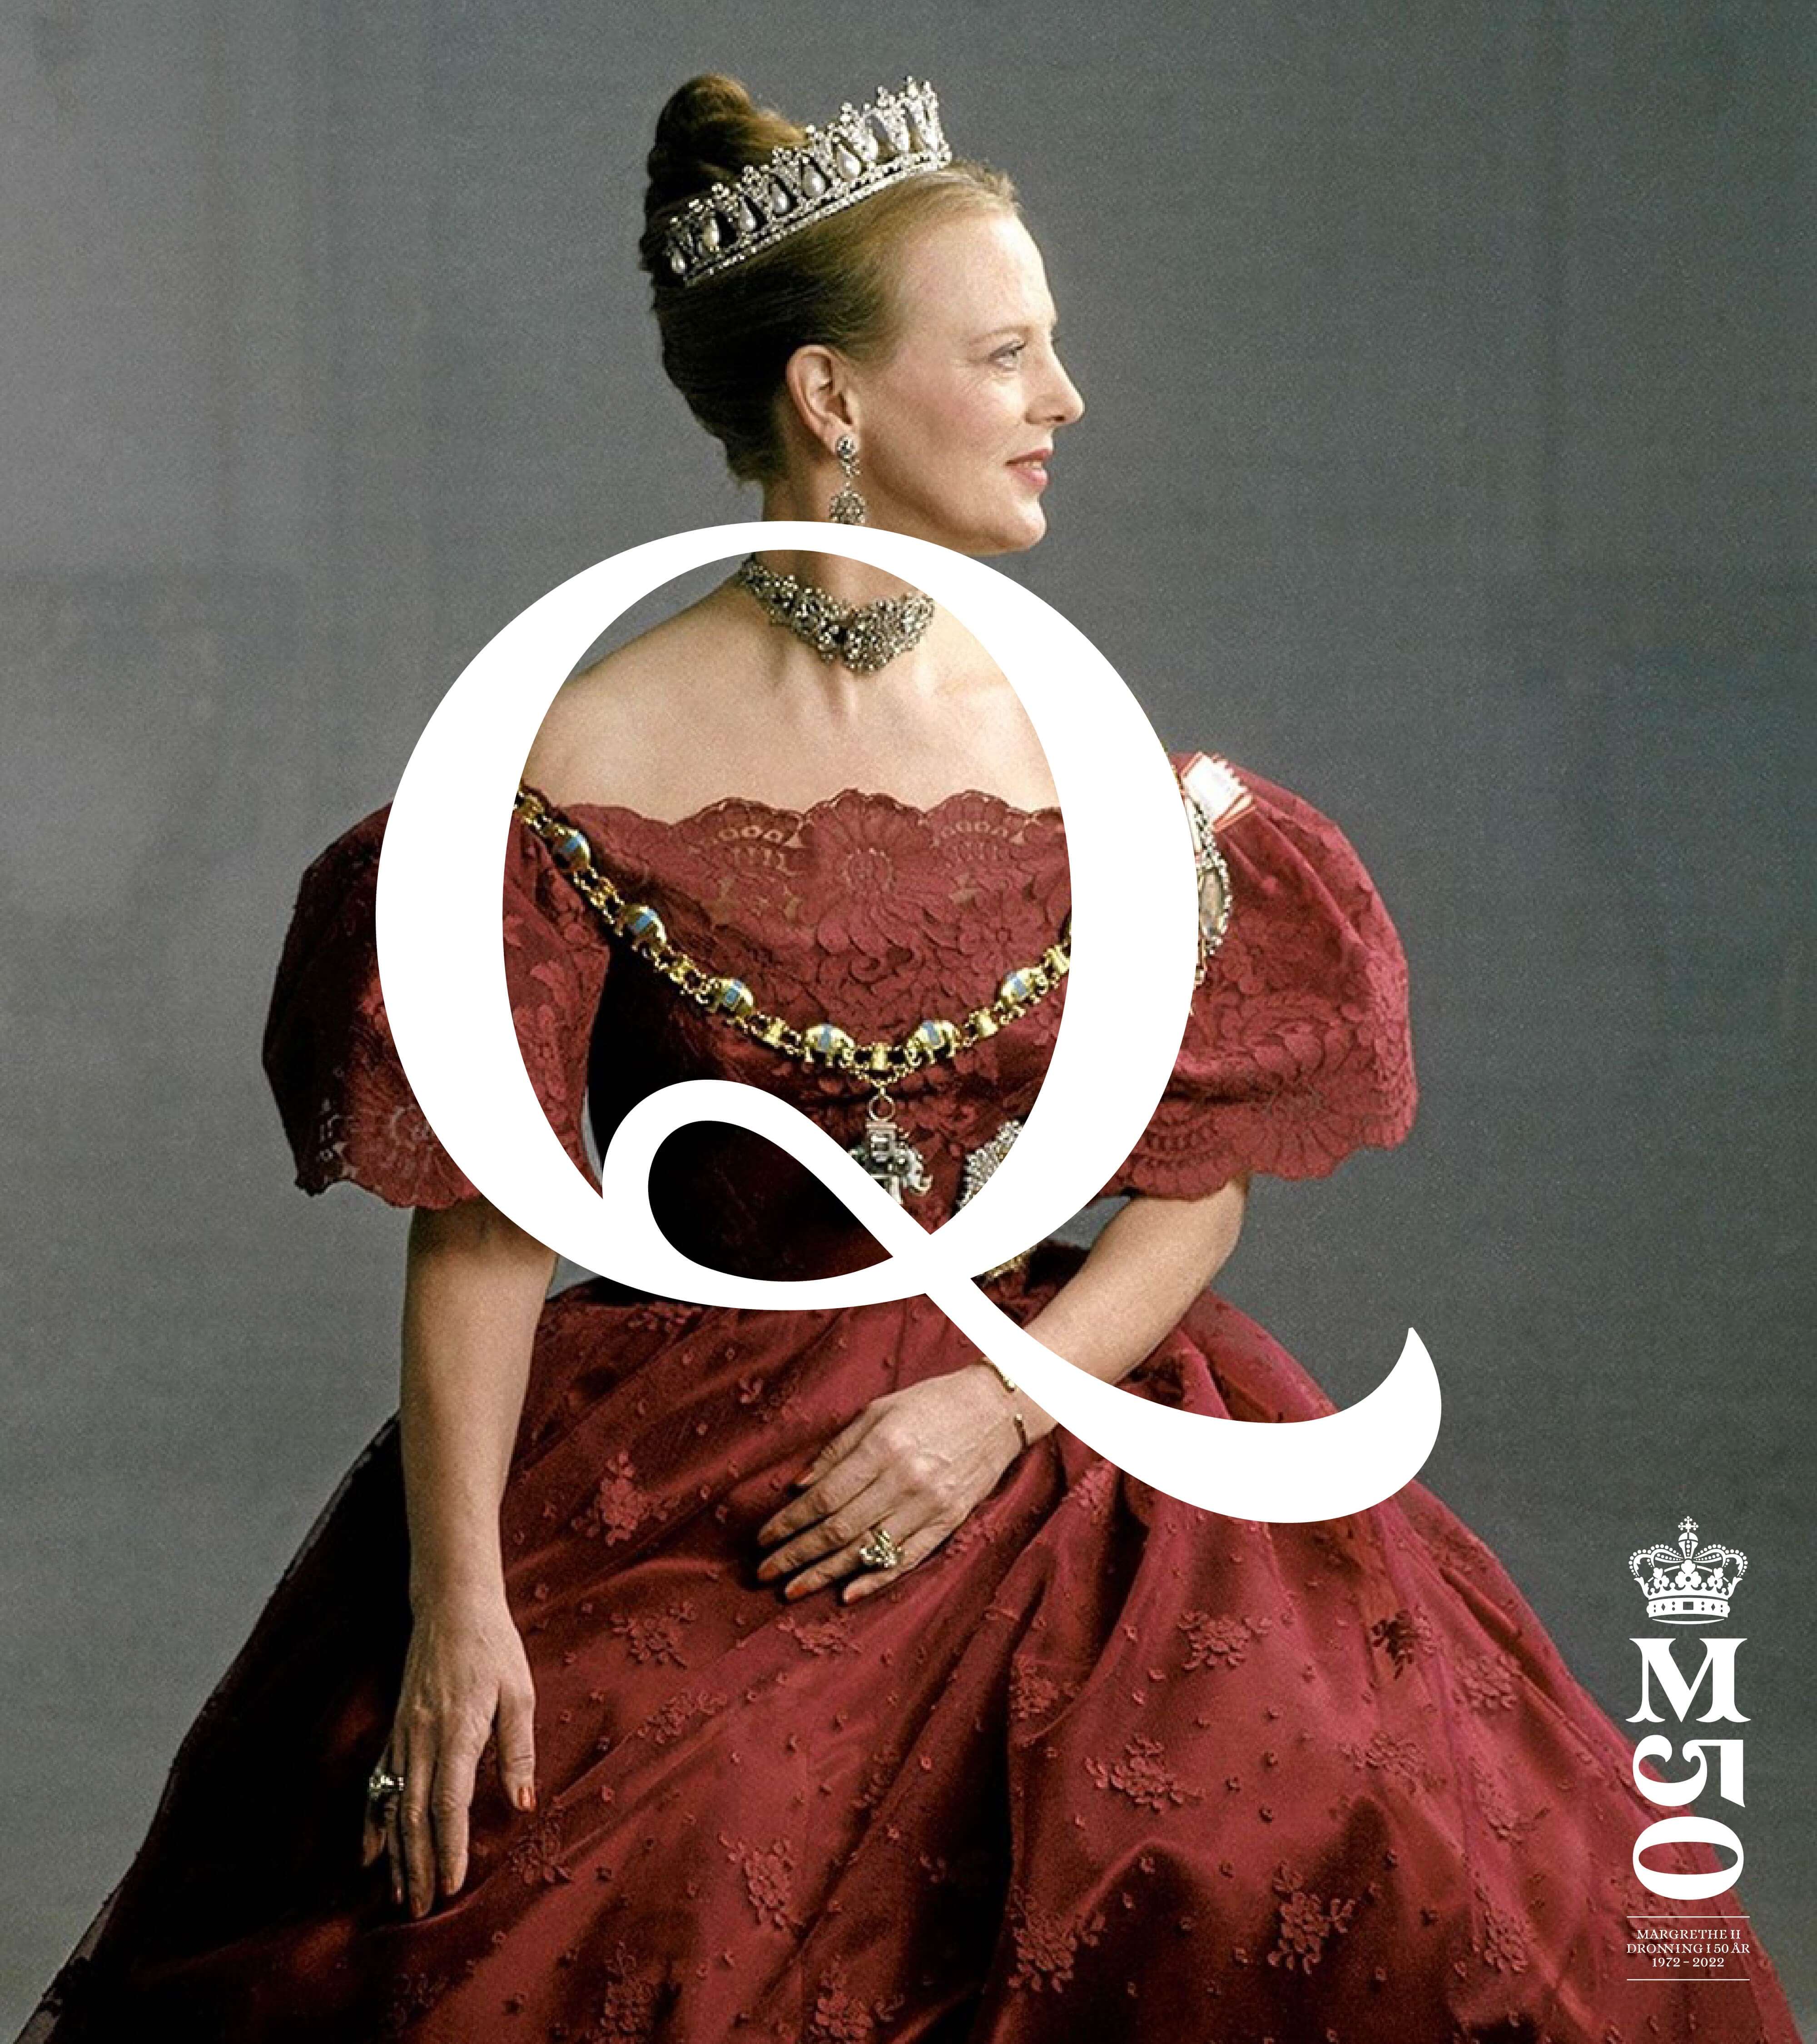 Celebrating 50 years of Her Majesty Queen Margrethe II of Denmark |  Kontrapunkt